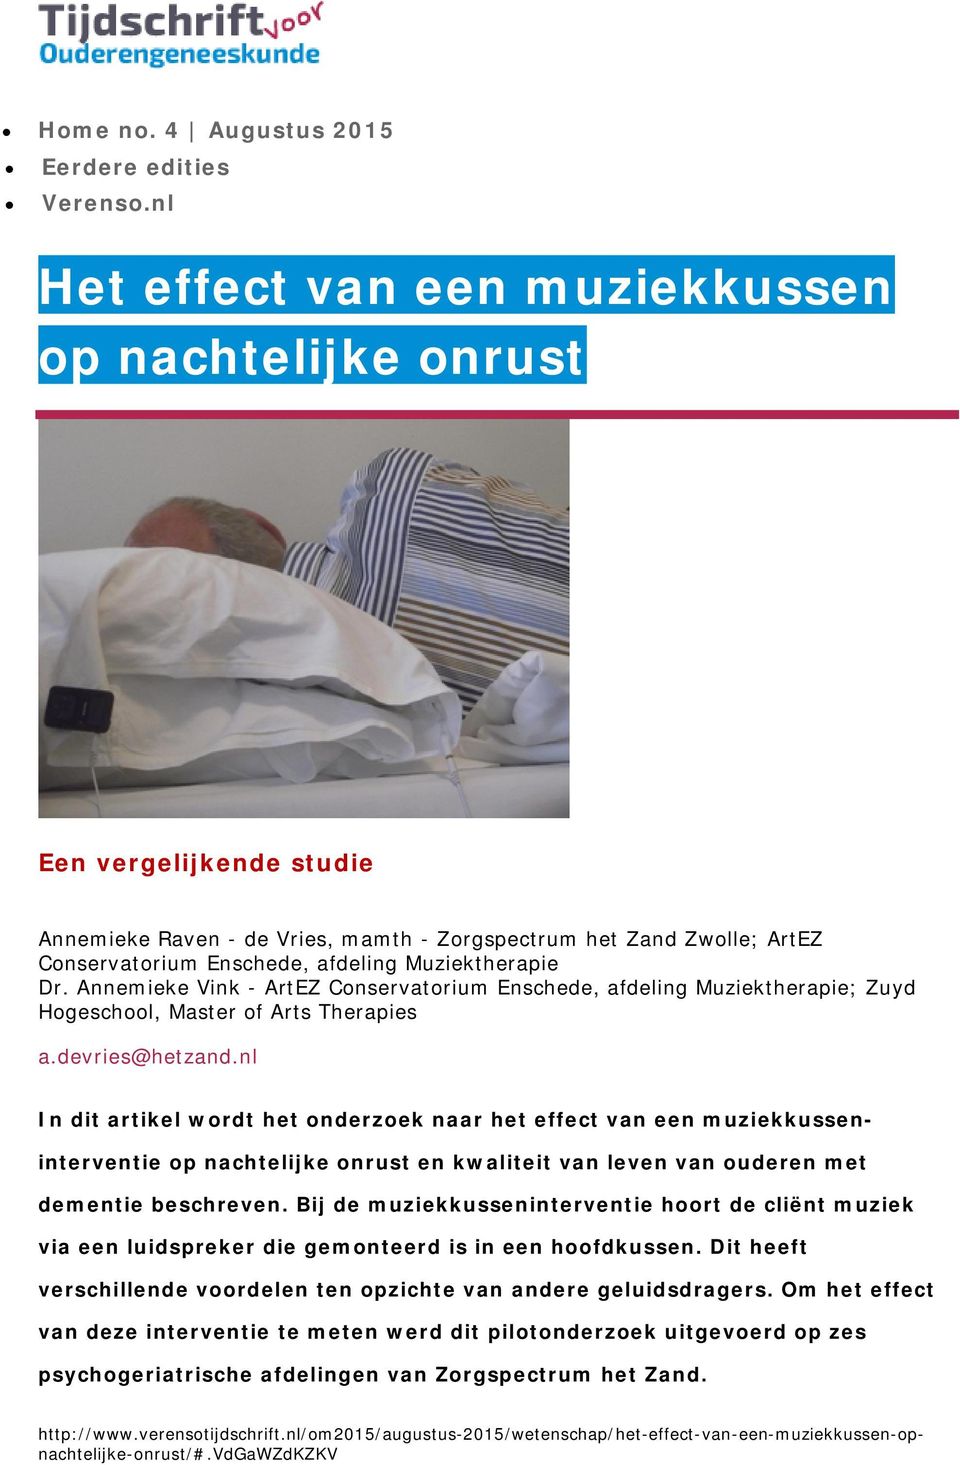 Annemieke Vink - ArtEZ Conservatorium Enschede, afdeling Muziektherapie; Zuyd Hogeschool, Master of Arts Therapies a.devries@hetzand.